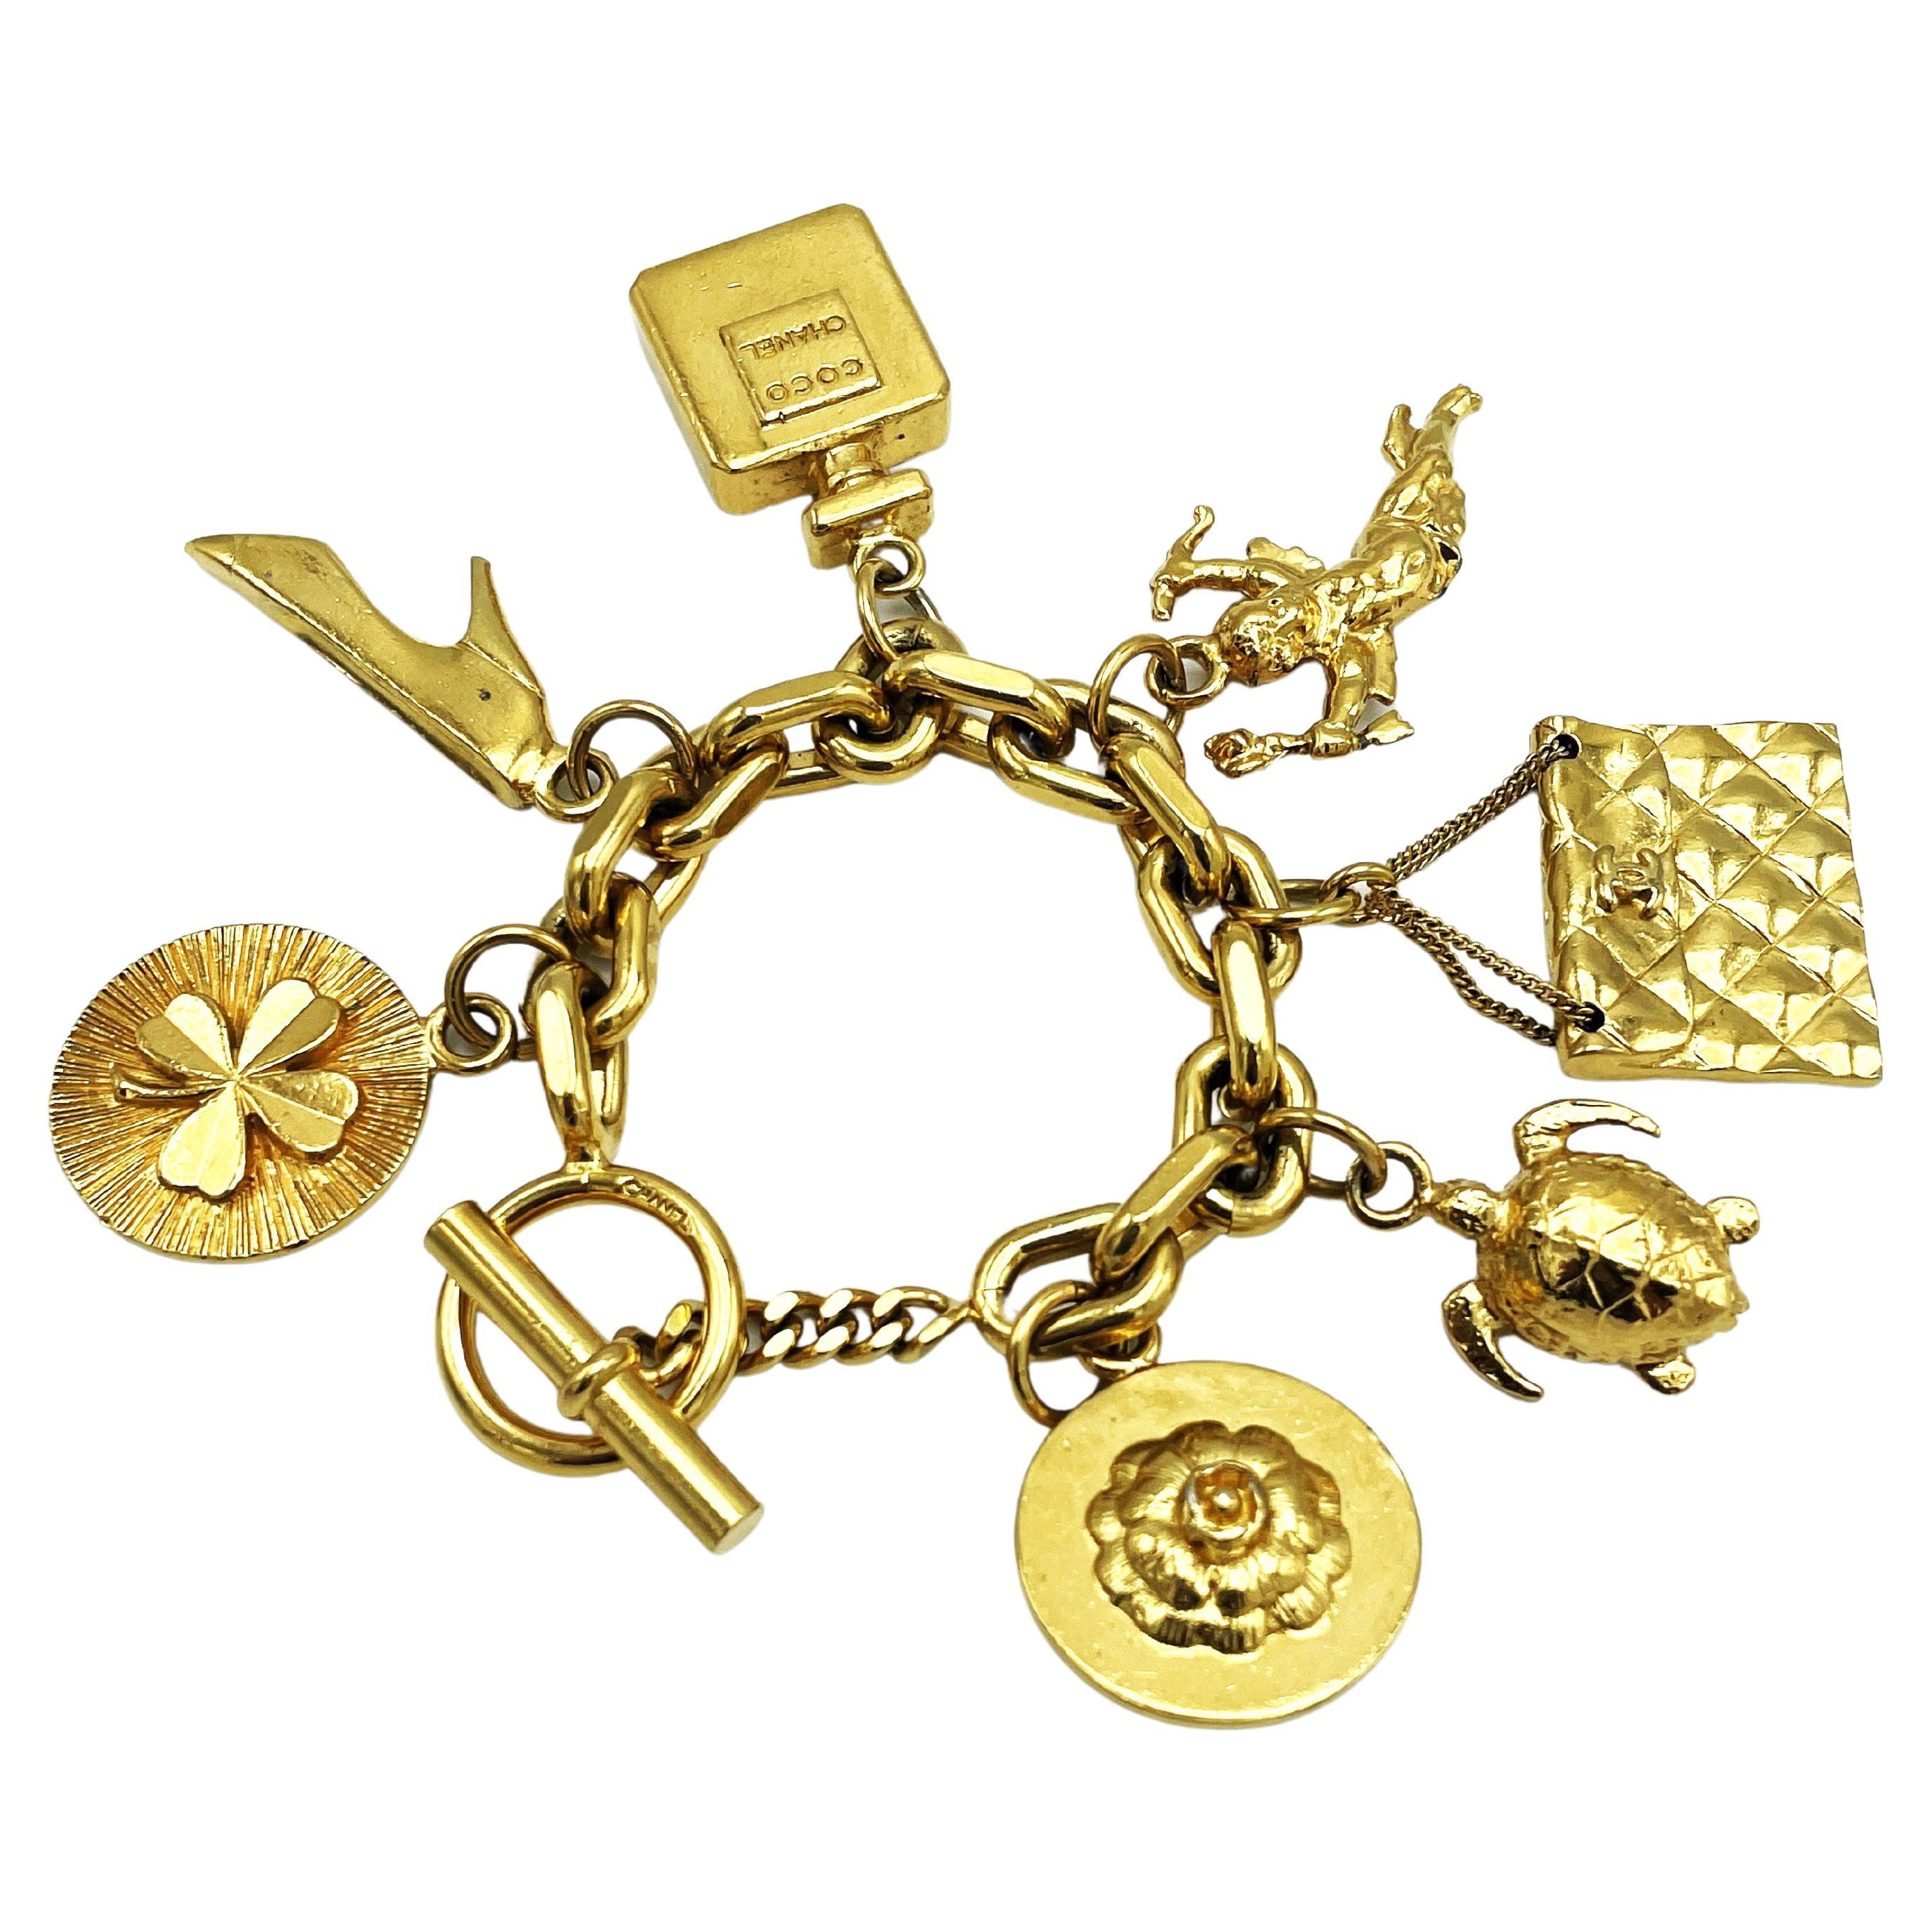 Chanel Style Perfume Bottle Rhinestone Keychain/Bag Charm